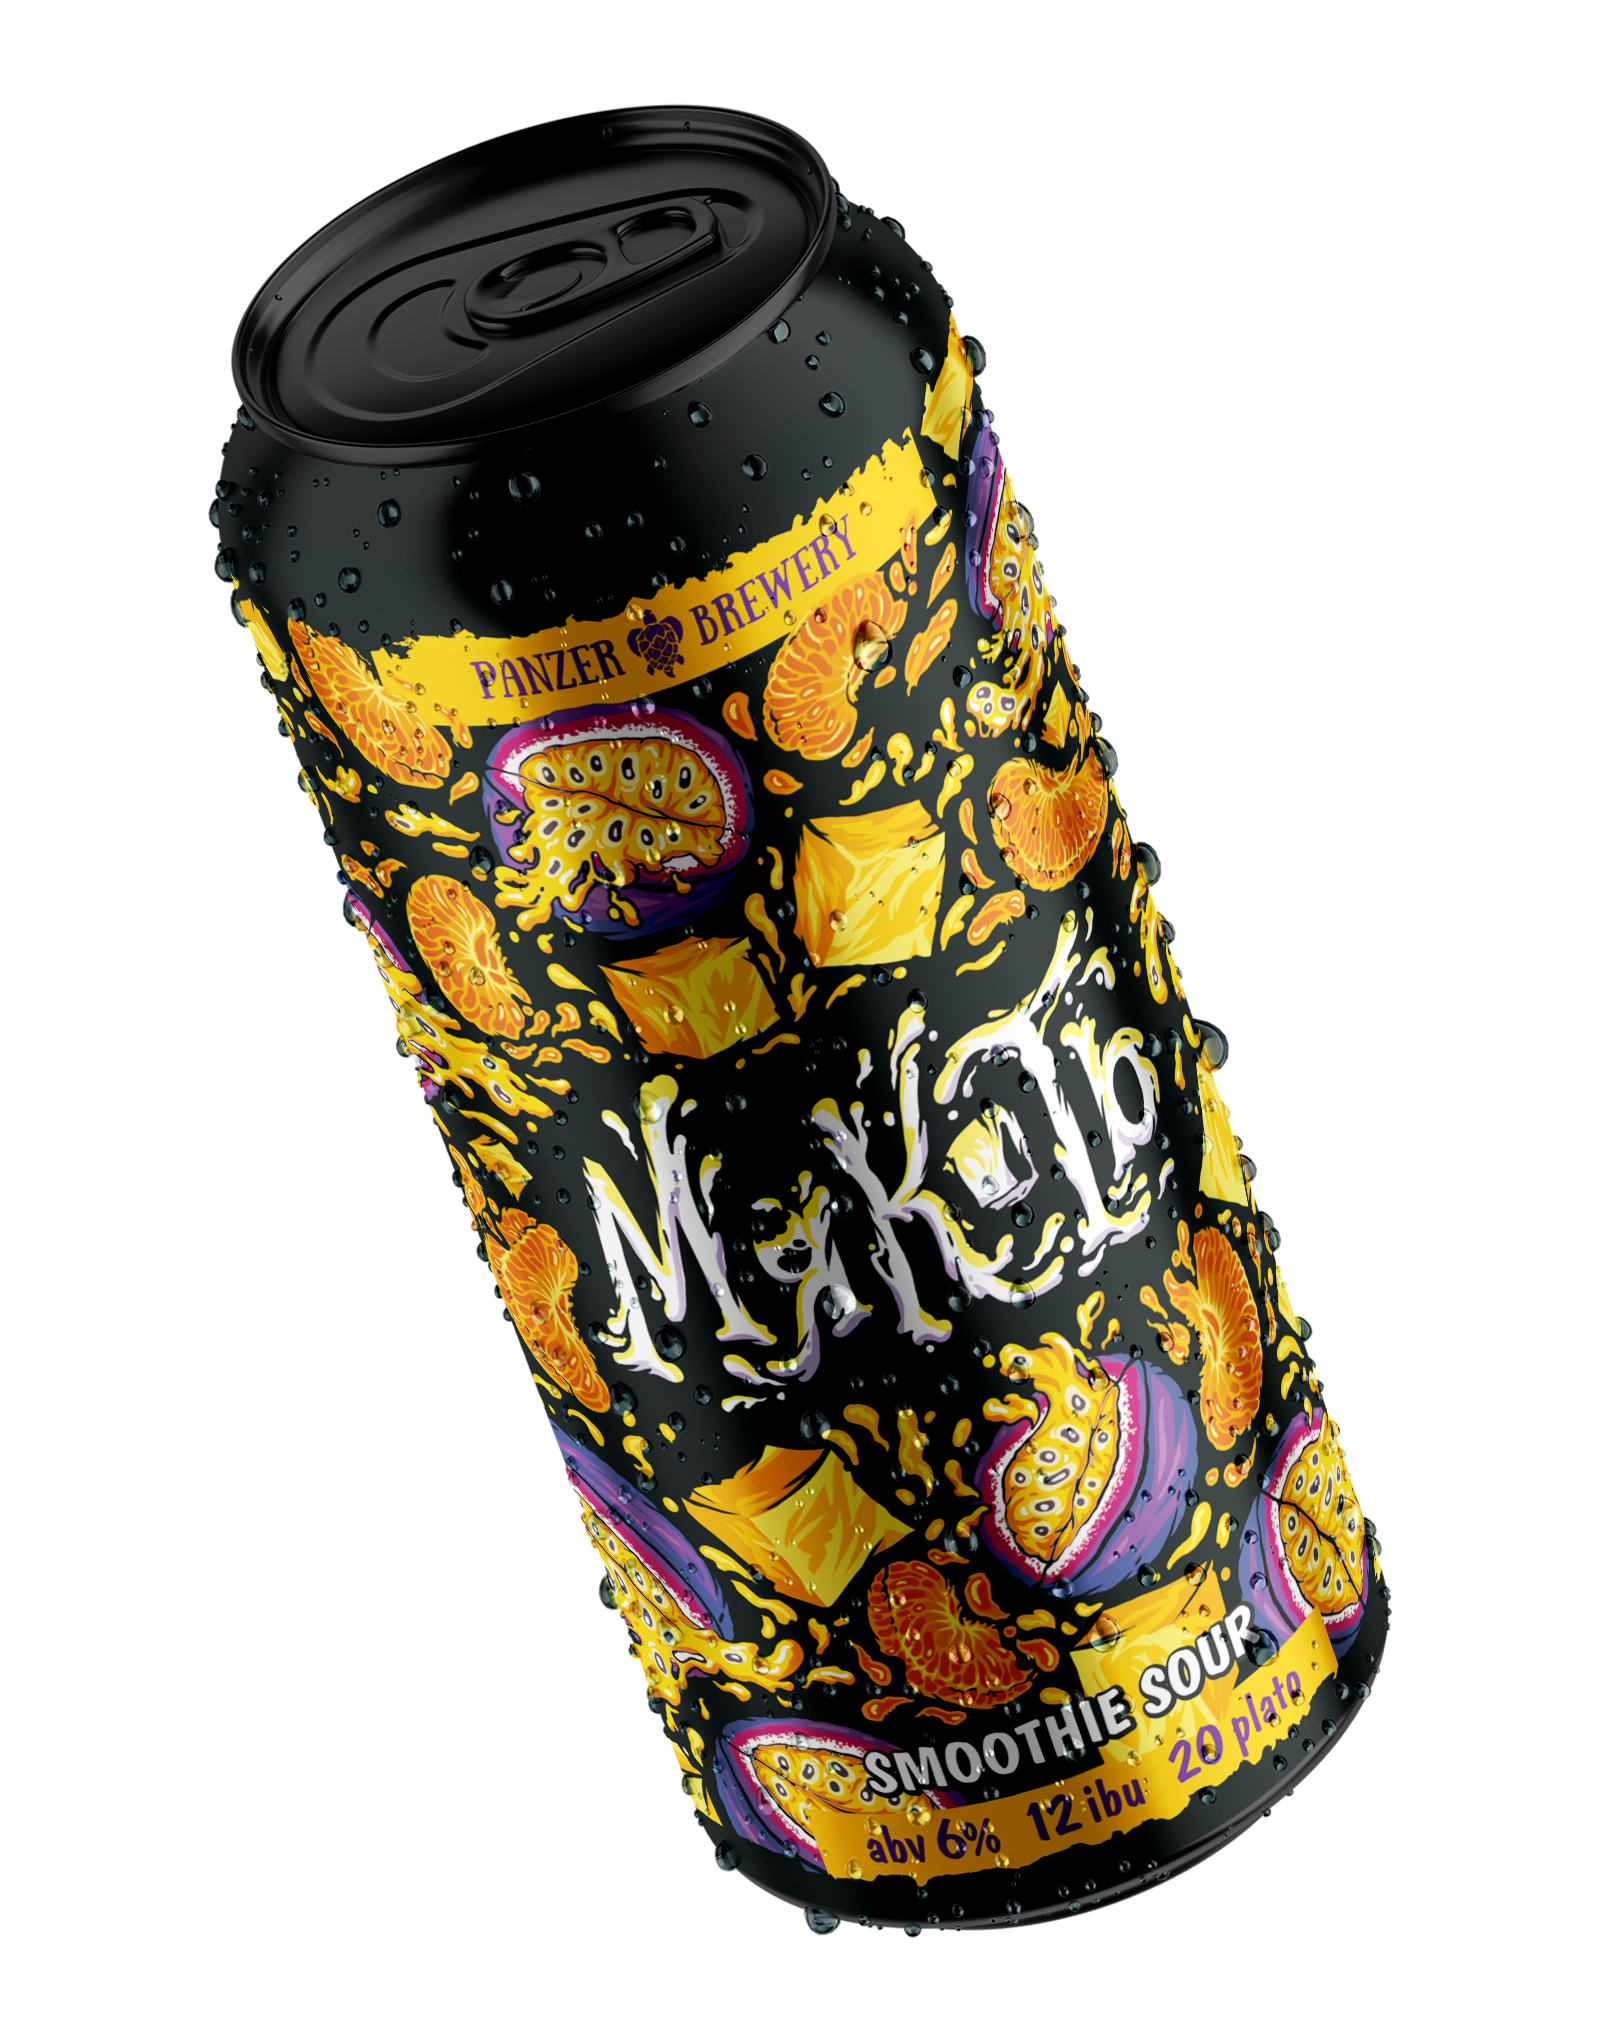 Банка пива Мякоть / Манго, Маракуйя и Мандарин - Sour Smoothie от Panzer Brewery